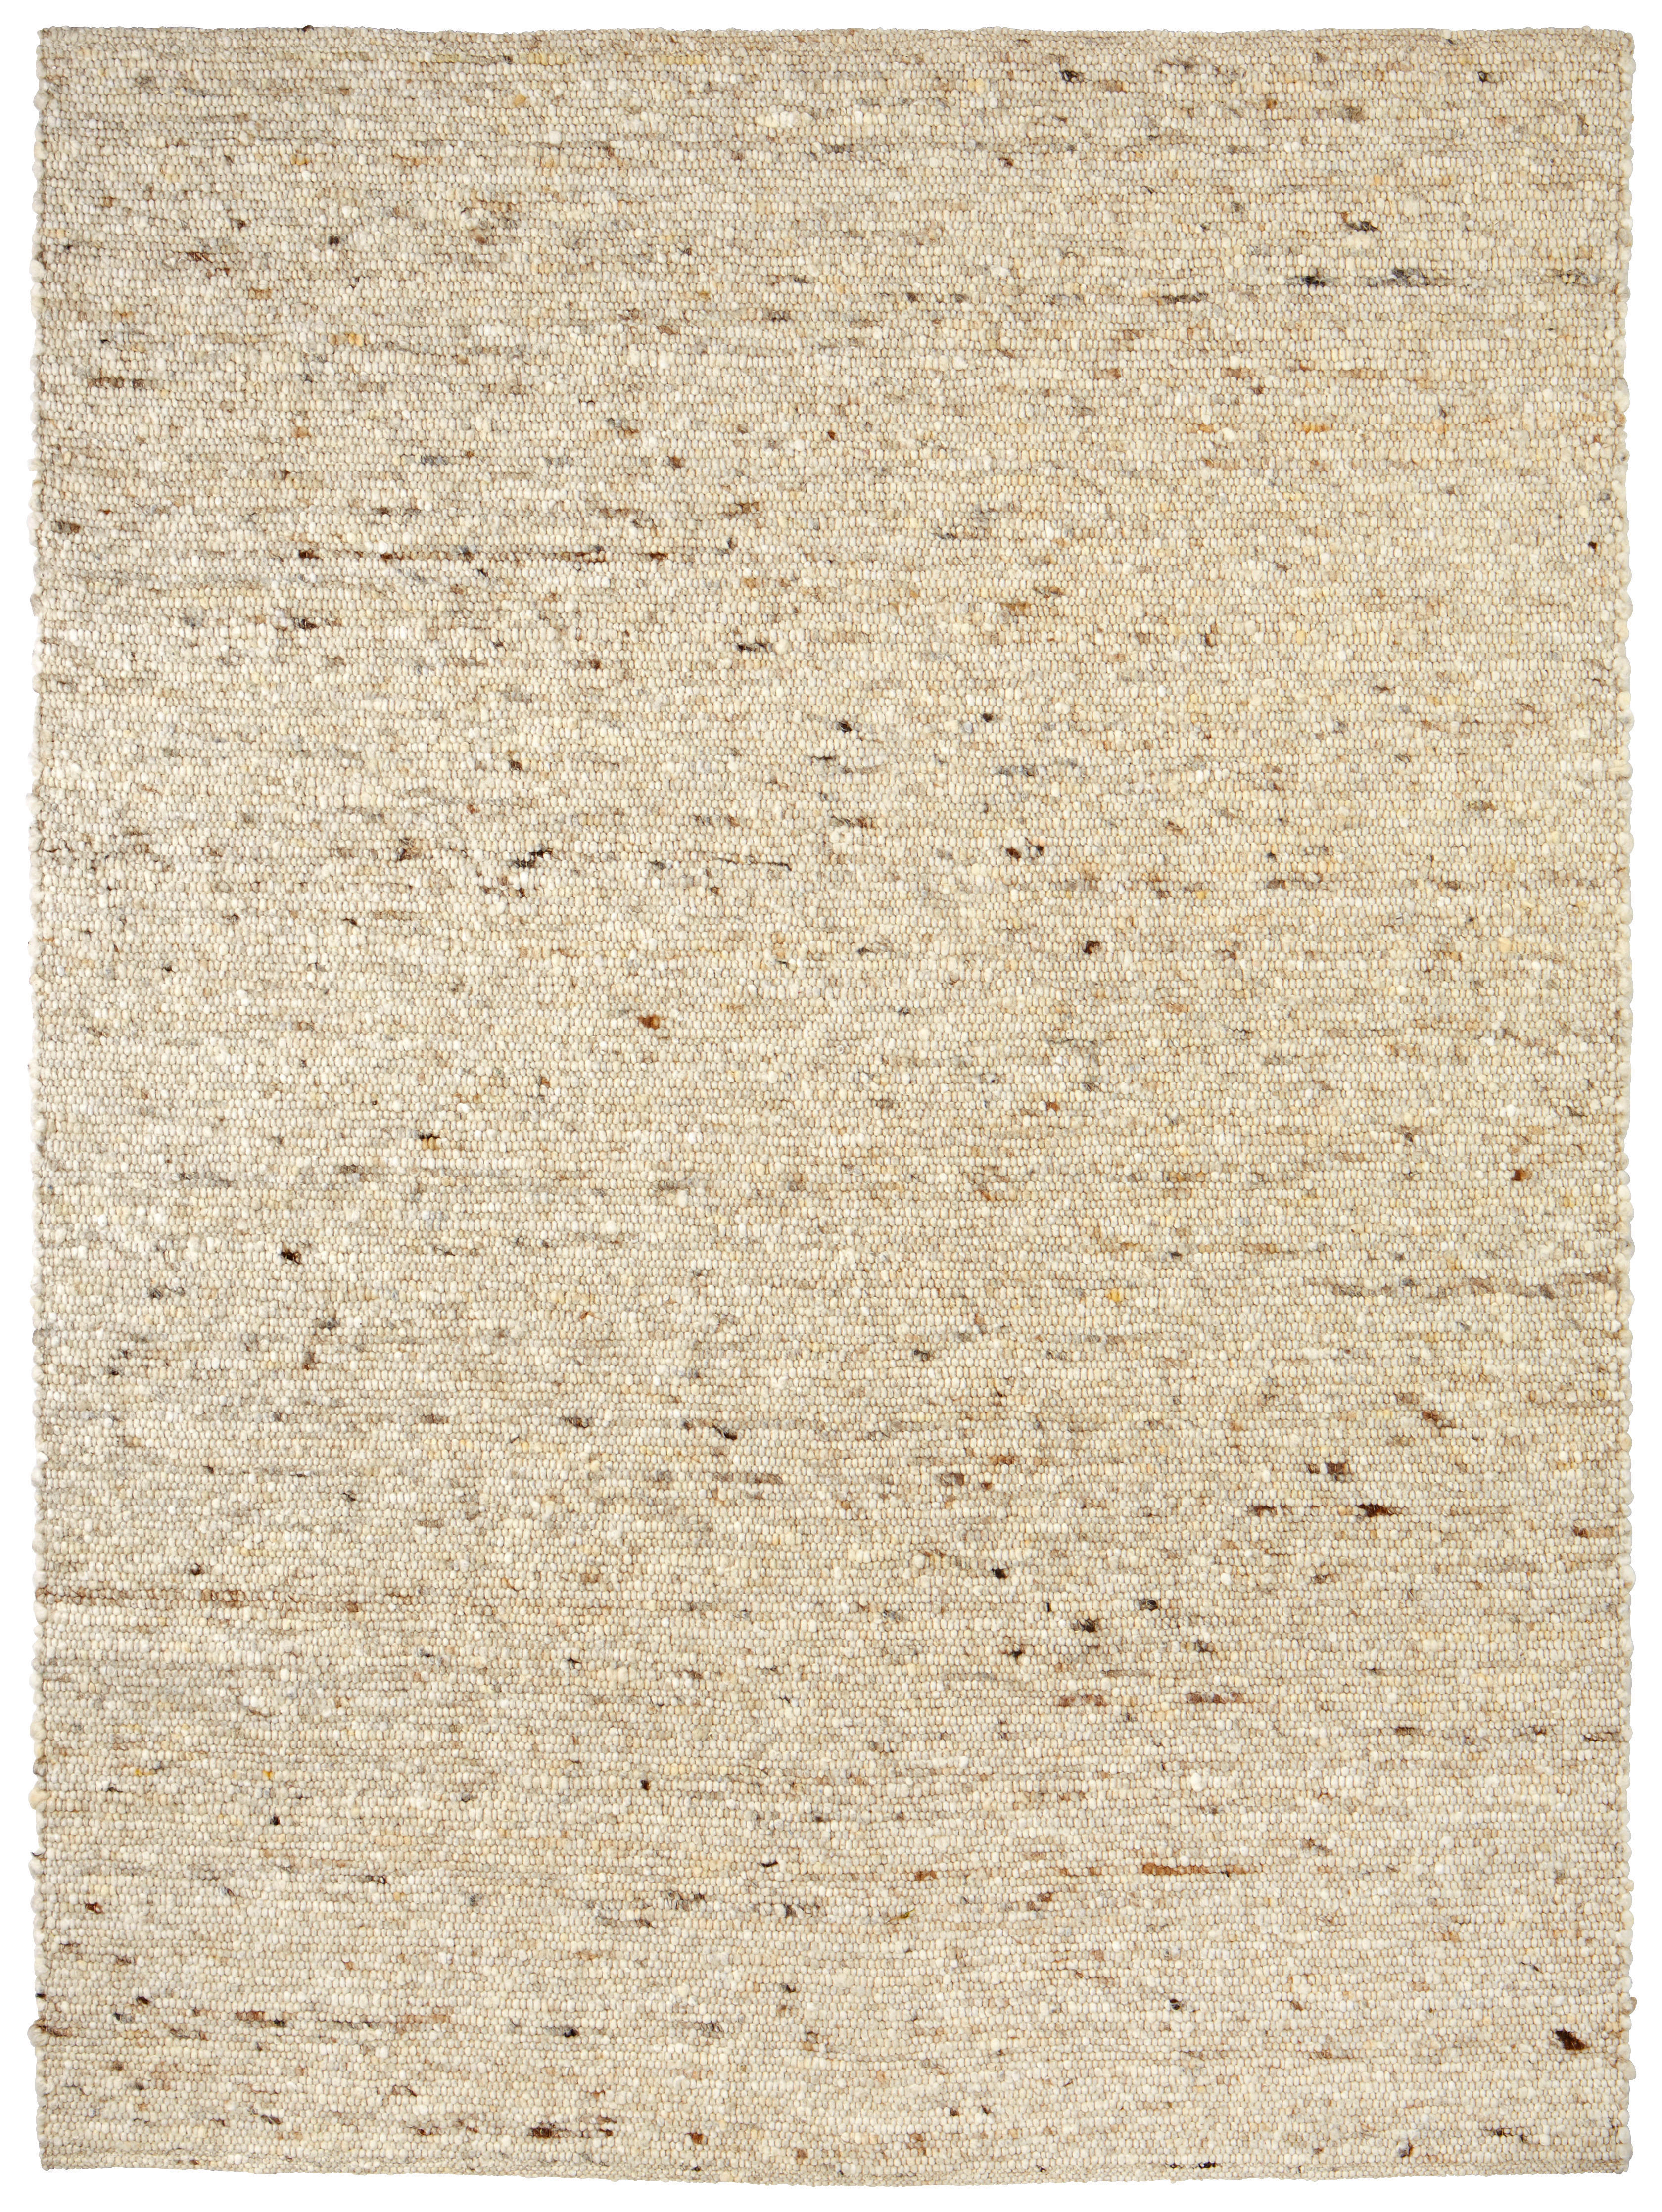 HANDWEBTEPPICH  60/110 cm  Beige   - Beige, Basics, Textil (60/110cm) - Linea Natura